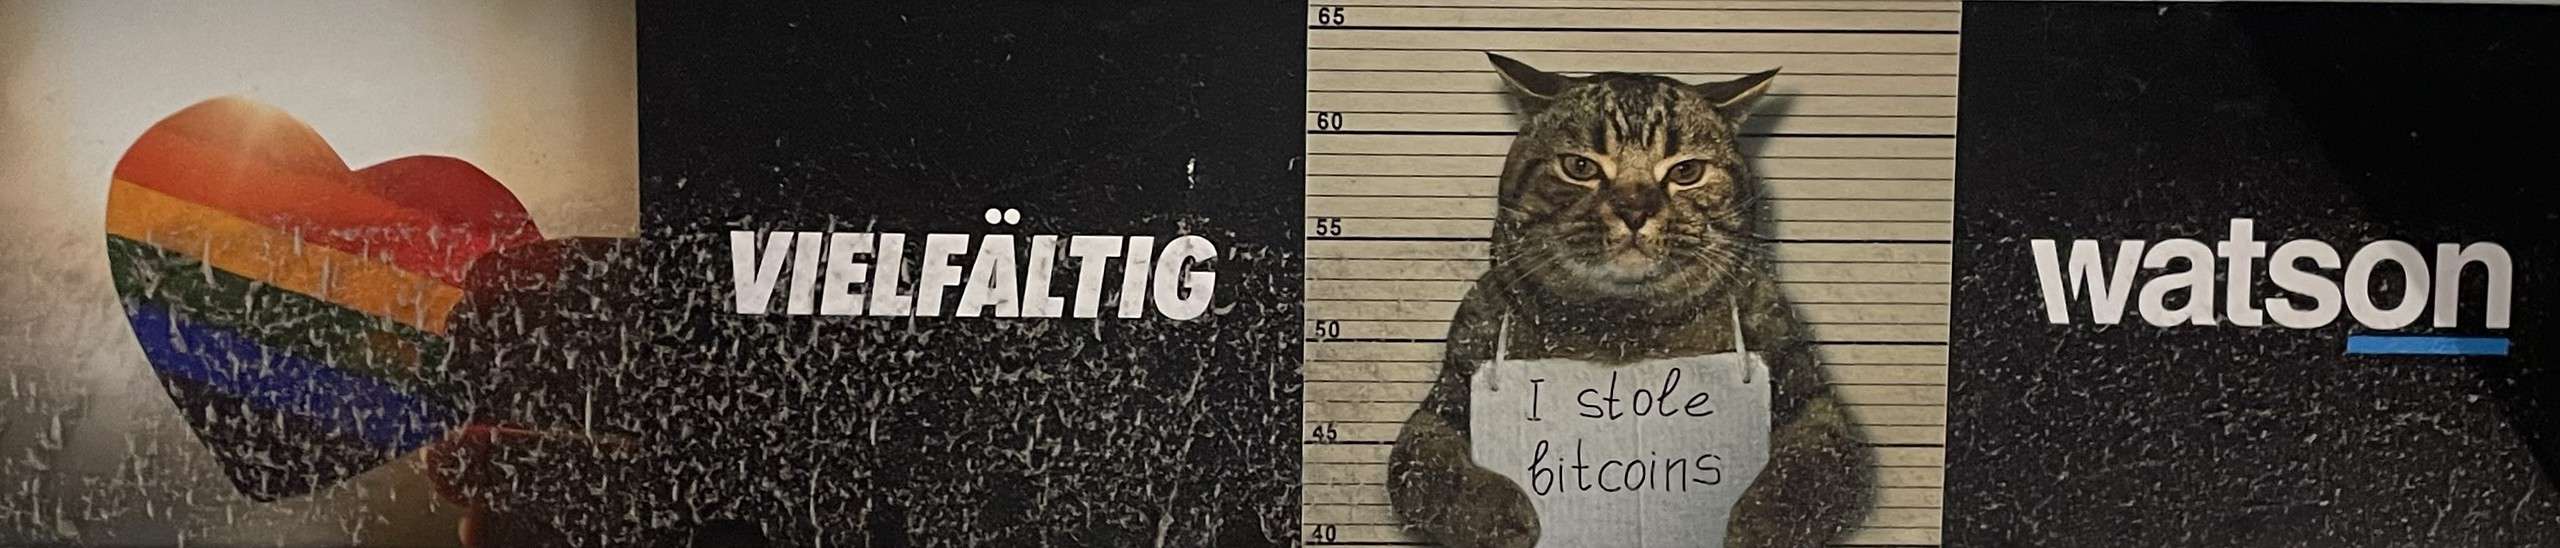 Karzenreklame: I stole Bitcoins - Katze in Polizeifotopose.